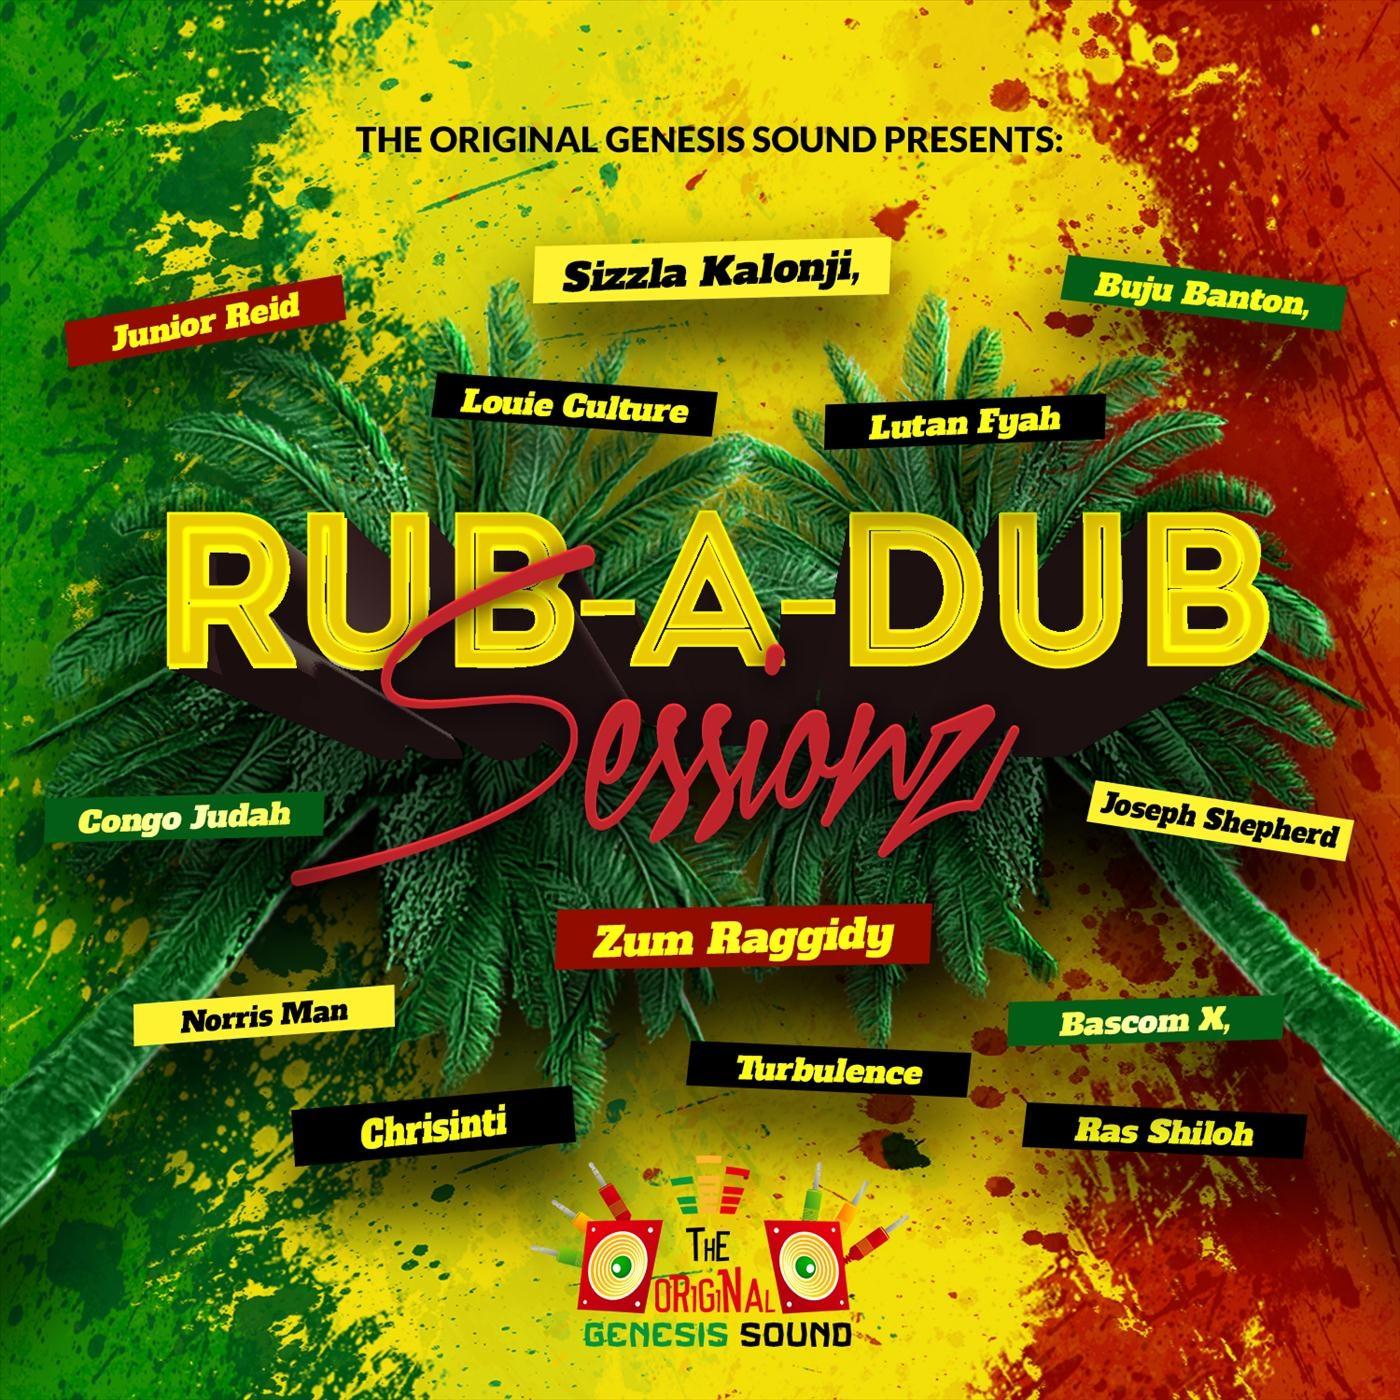 Rub-a-Dub Sessionz (The Original Genesis Sound Presents)